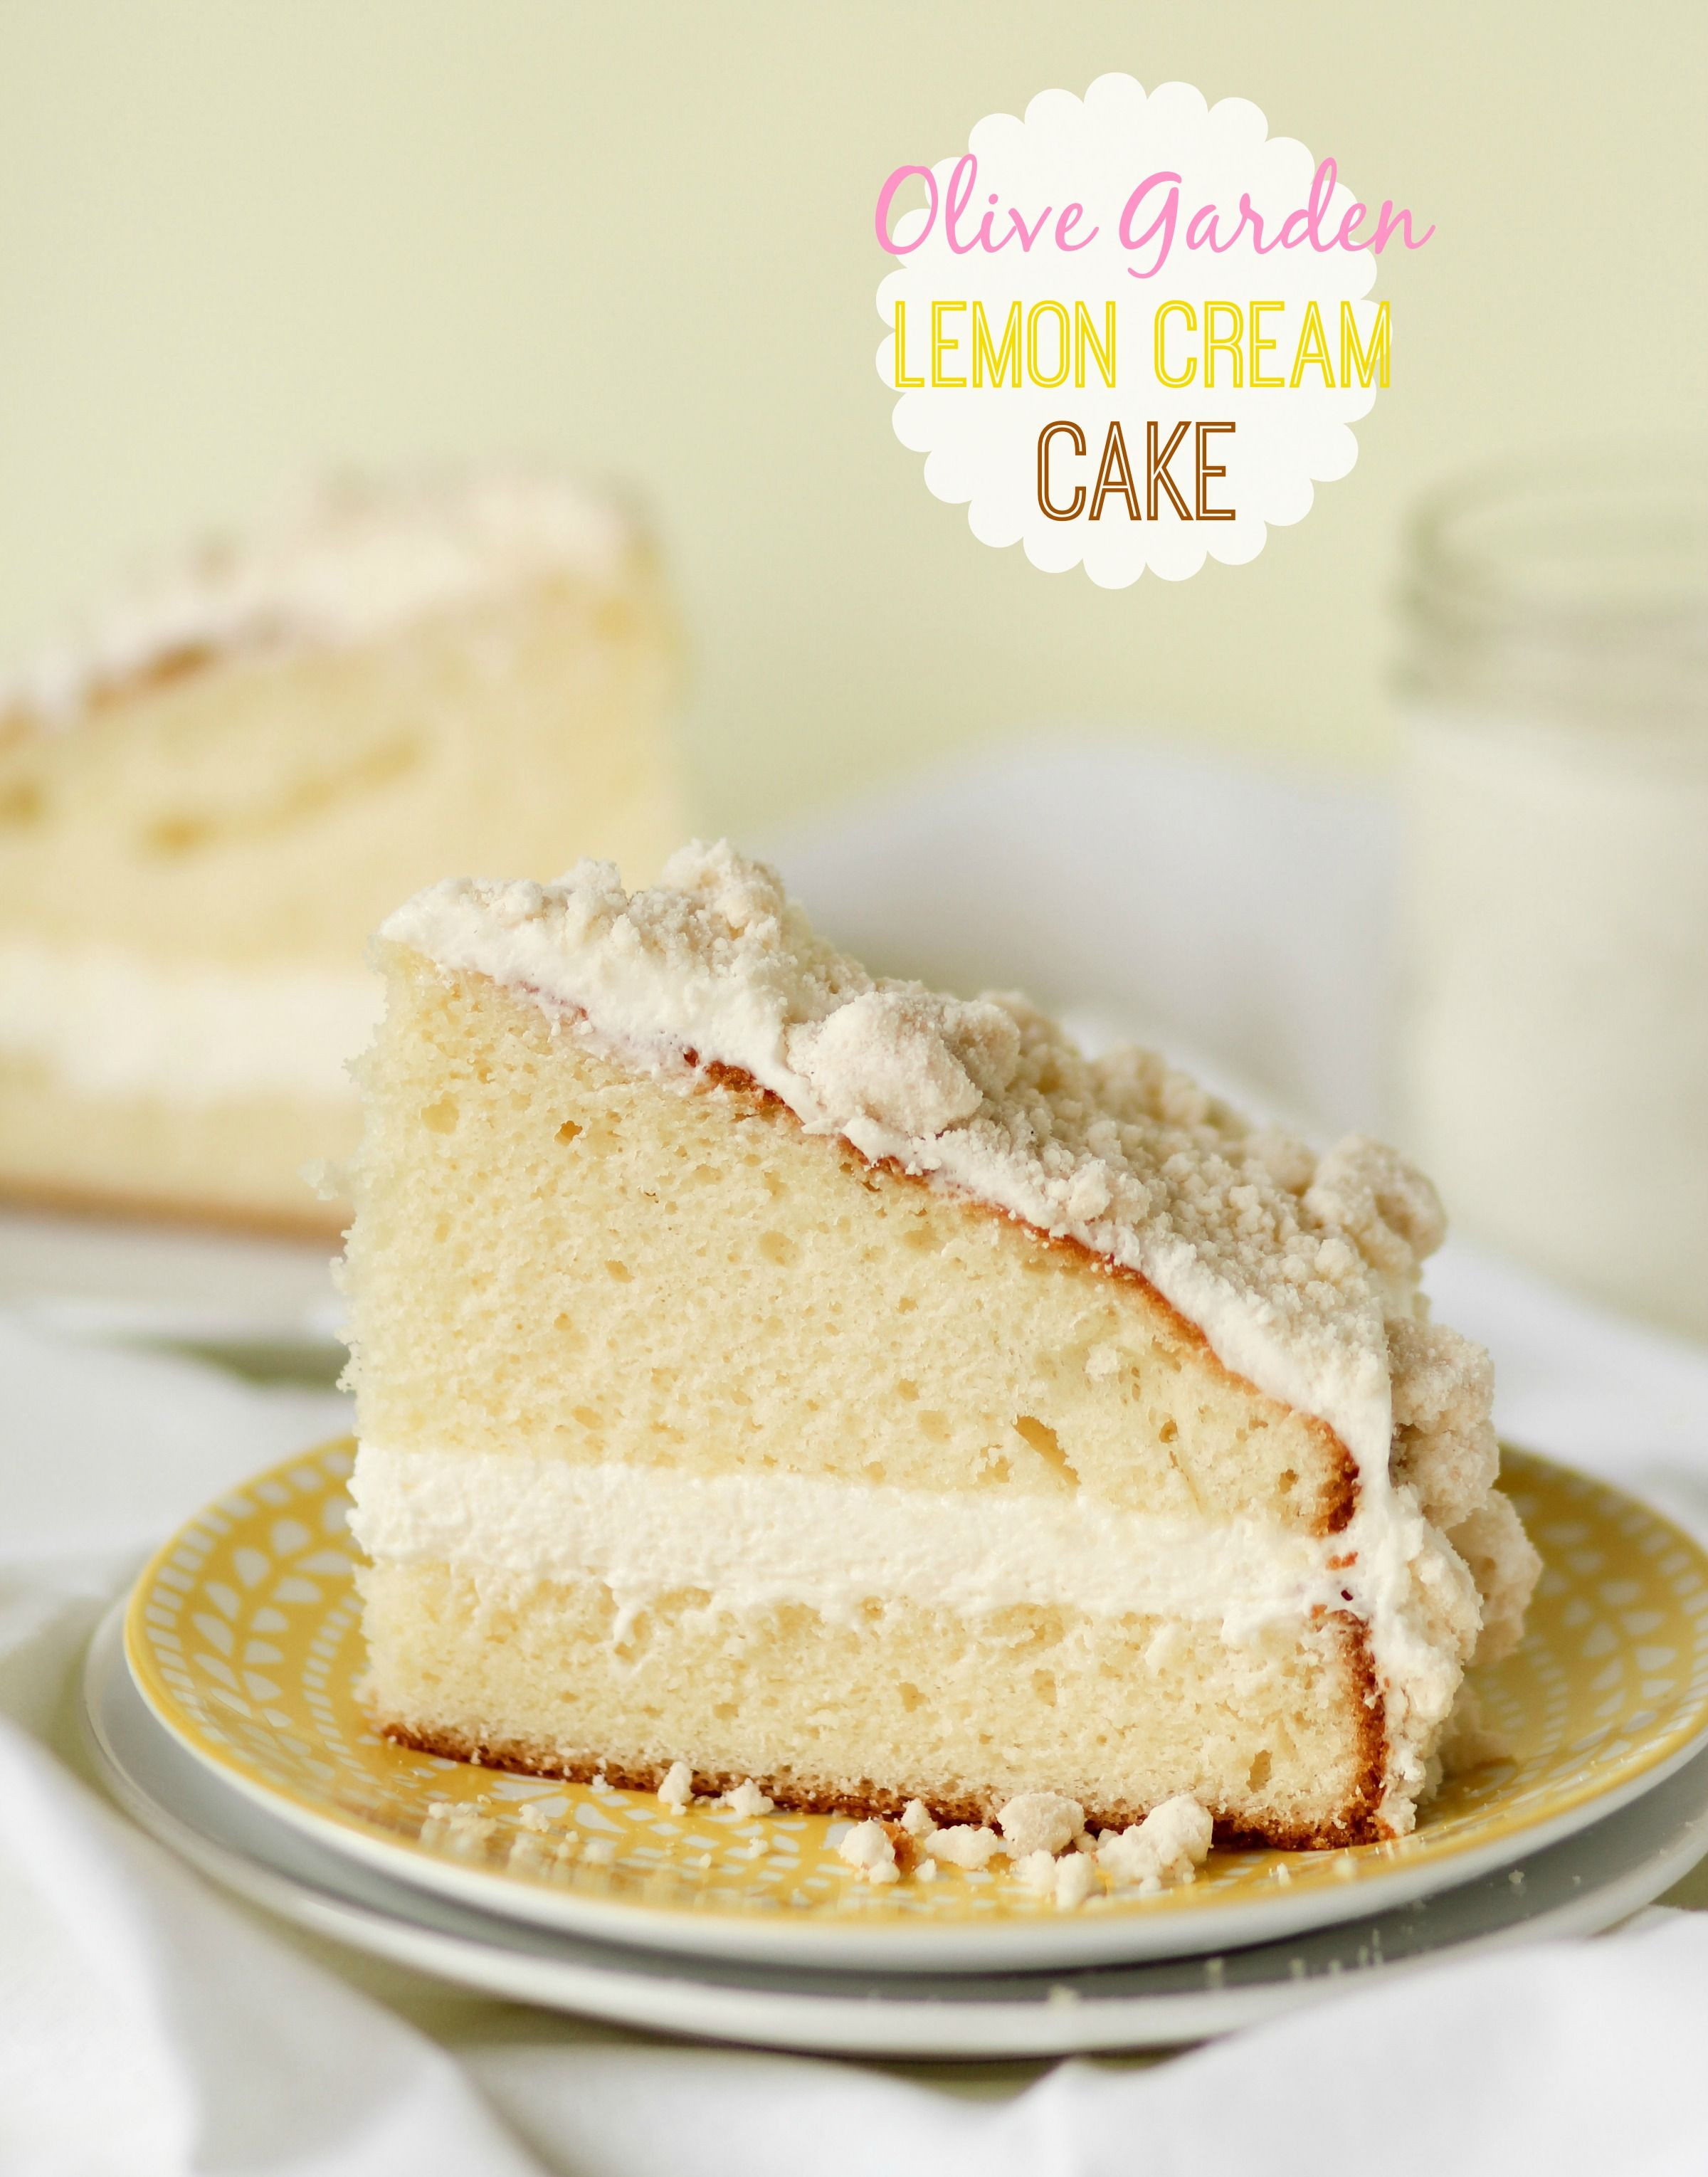 Olive Garden Lemon Cake
 Olive Garden Lemon Cream Cake from Confessions of a